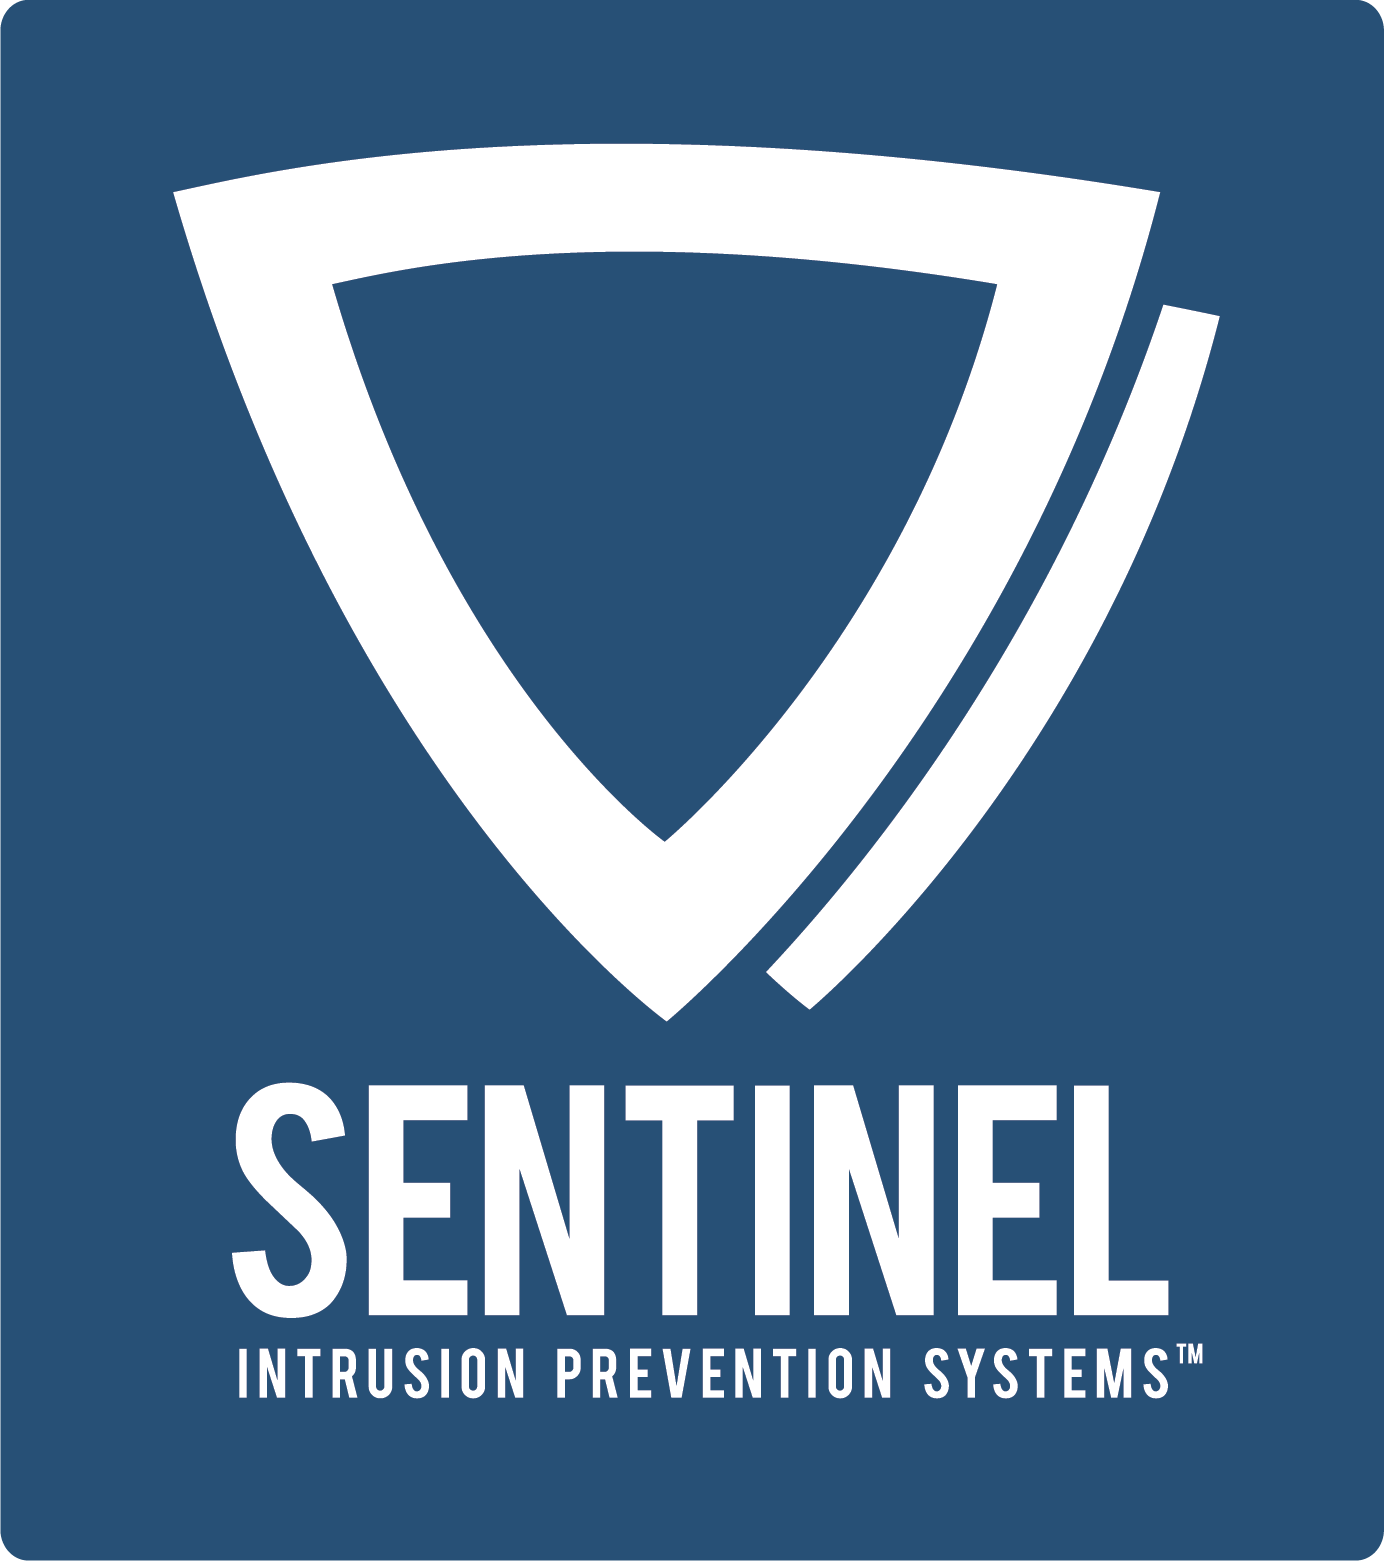 Sentinel Logo - Home - Sentinel Intrusion Prevention Systems